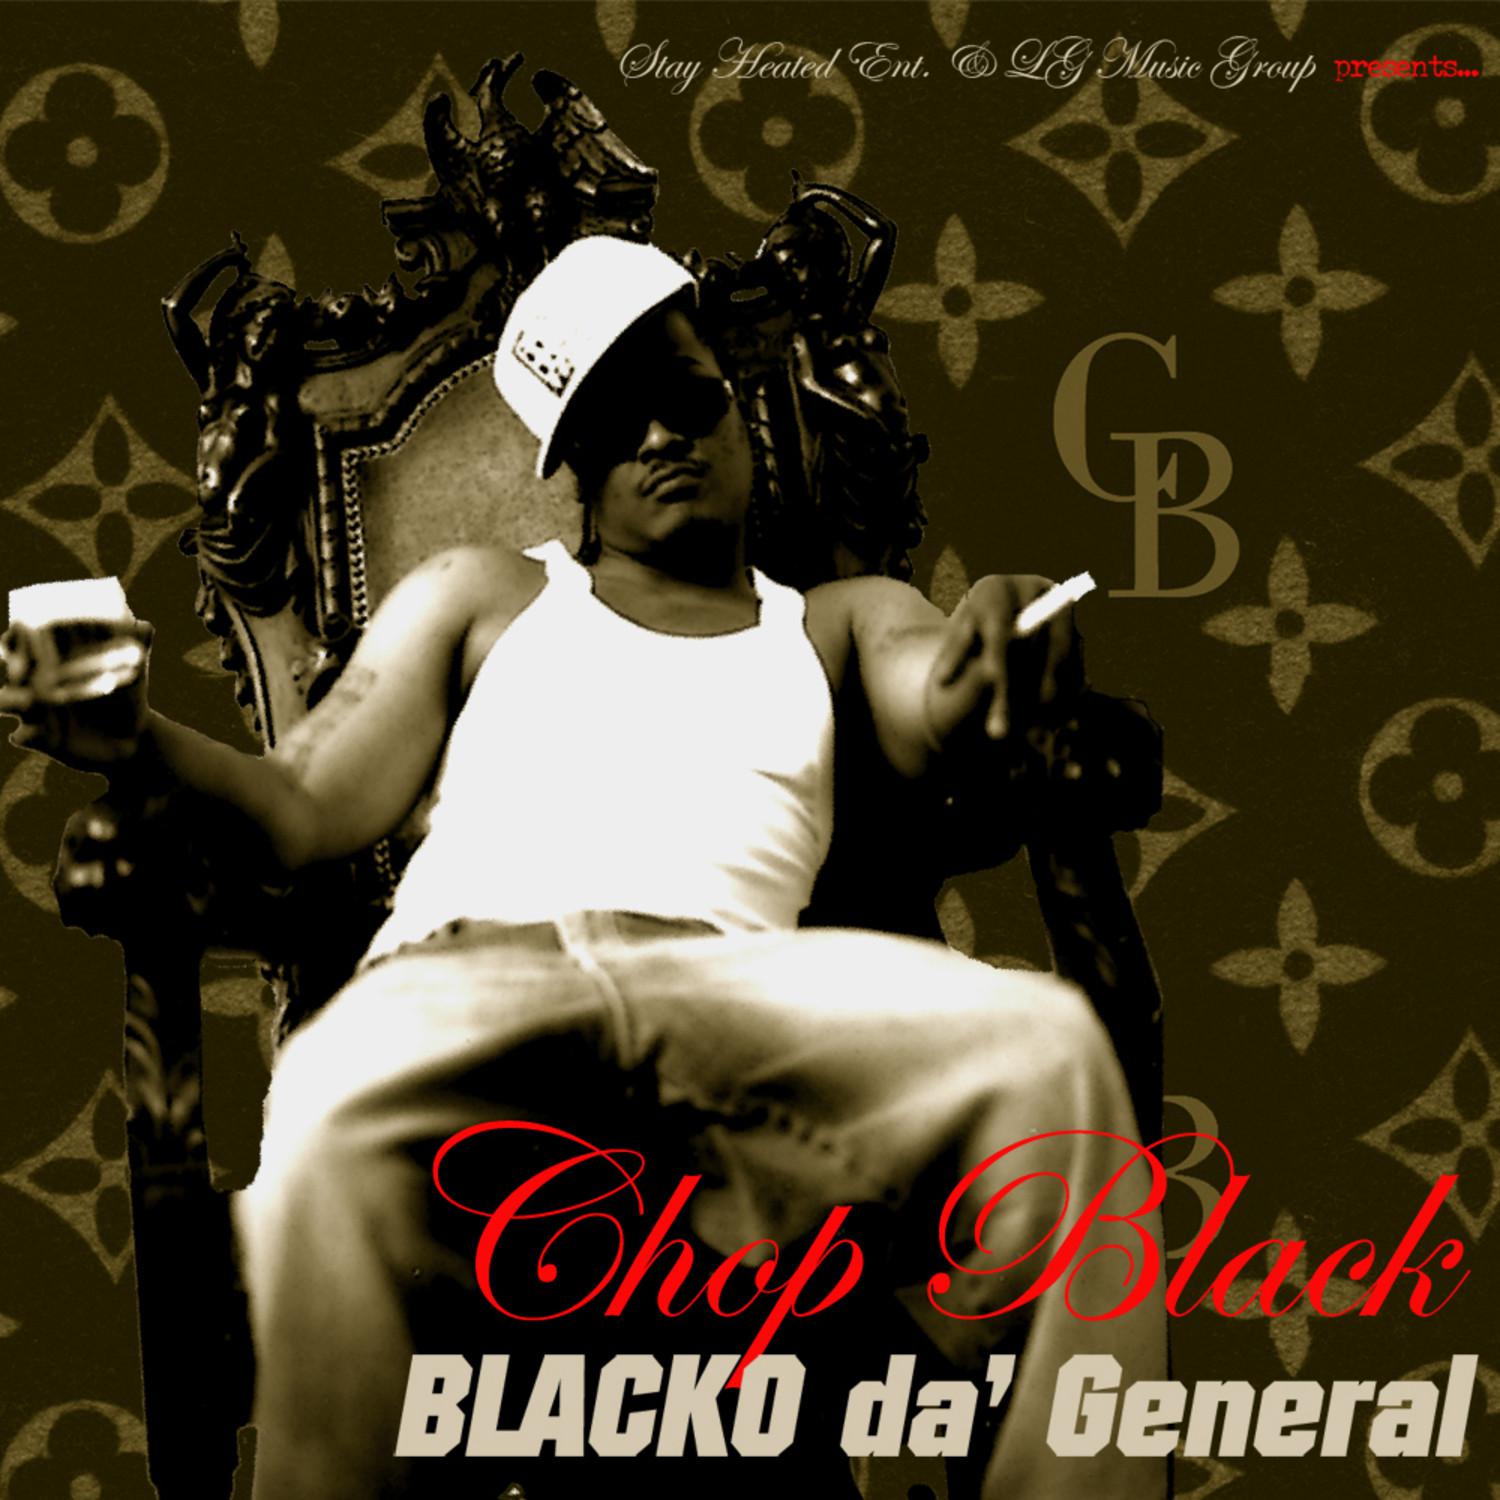 Stay Heated Ent & LG Music Grp Presents Blocko' Da General